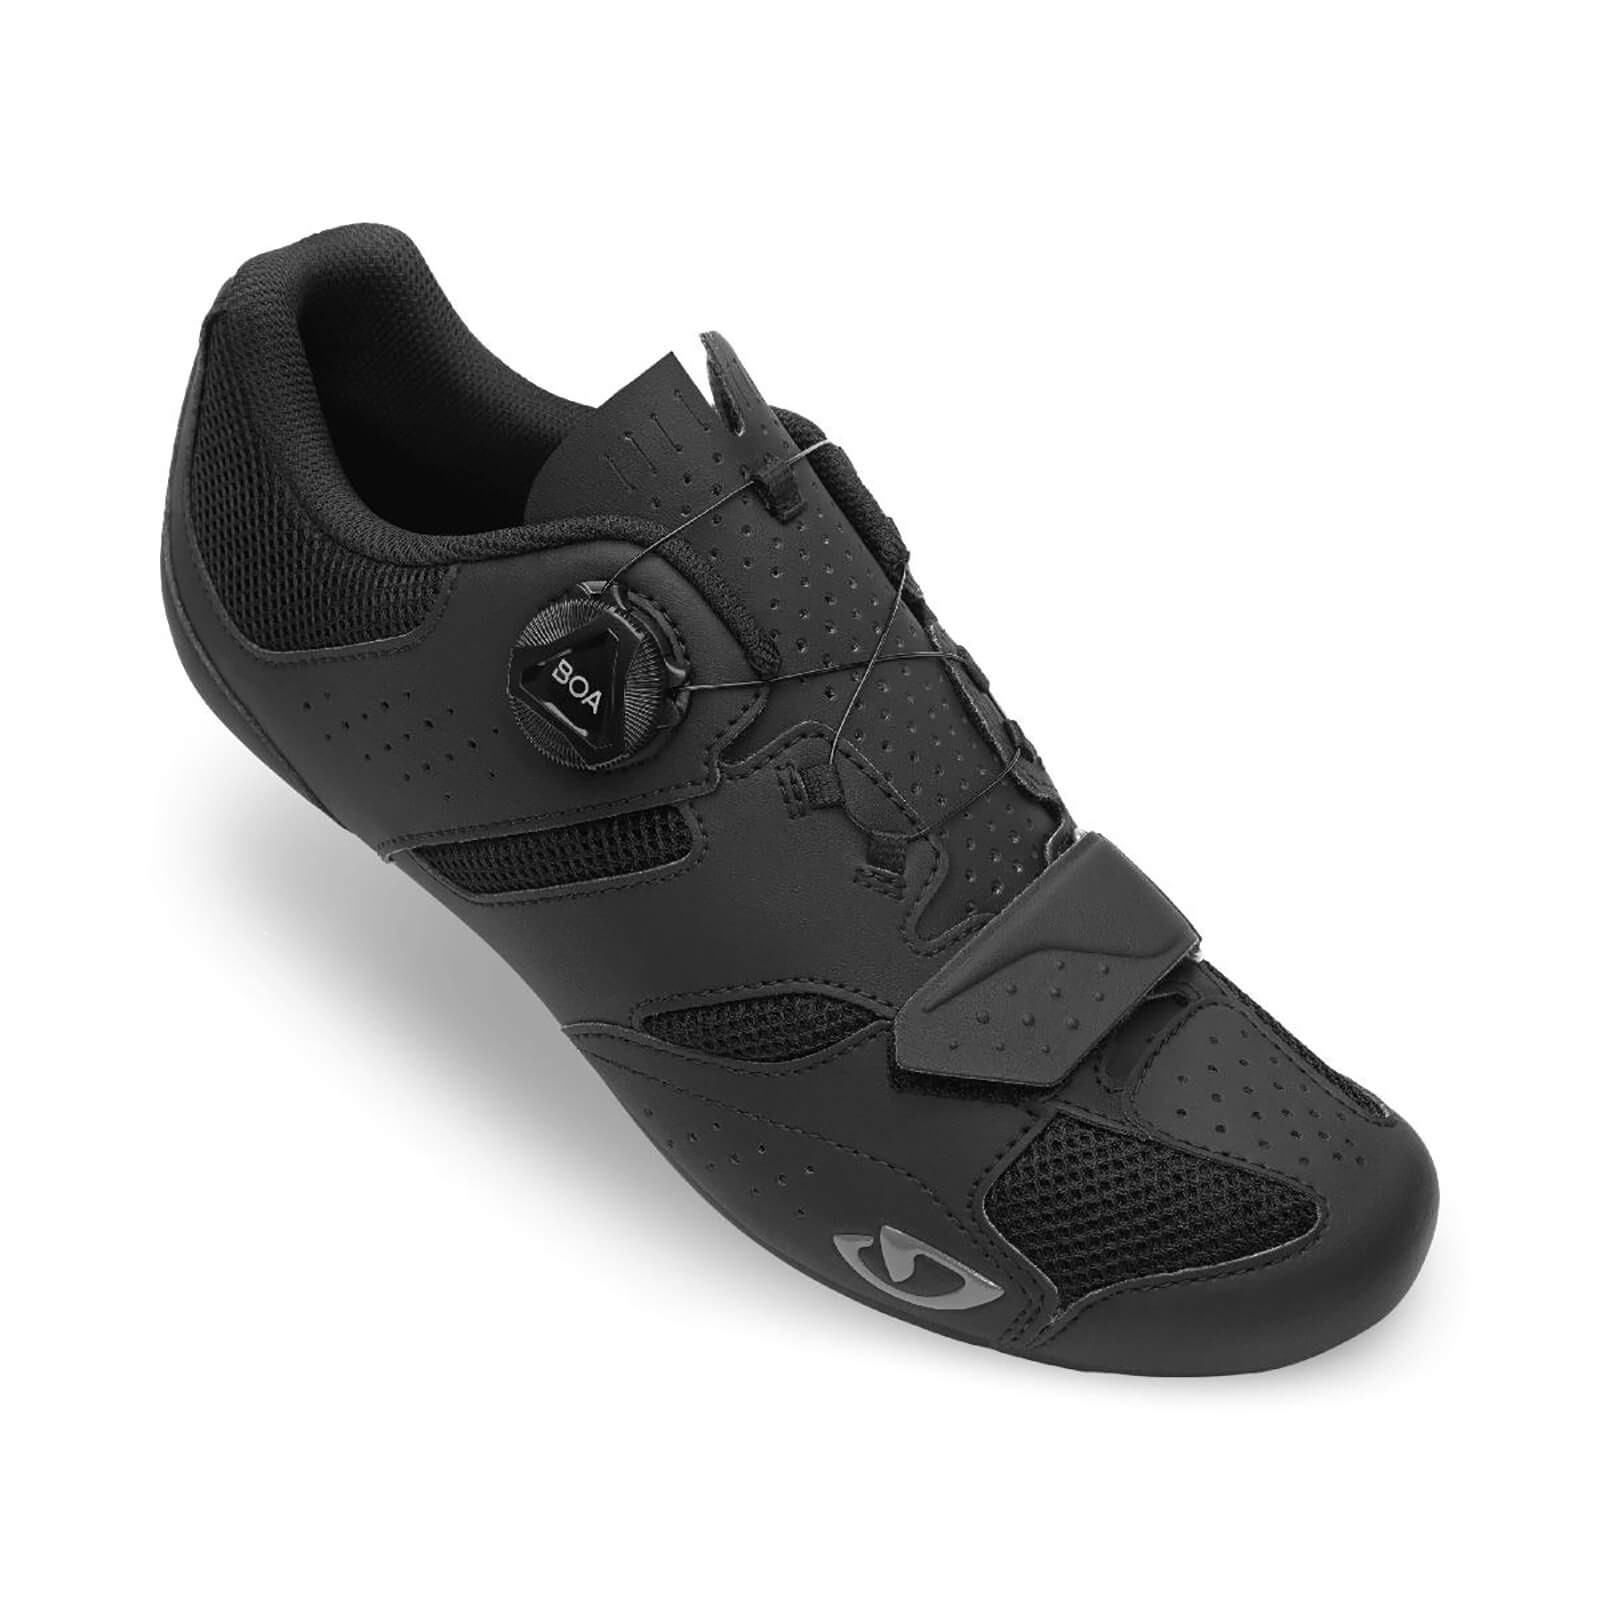 Giro Savix II Road Shoes - EU 46 - Black